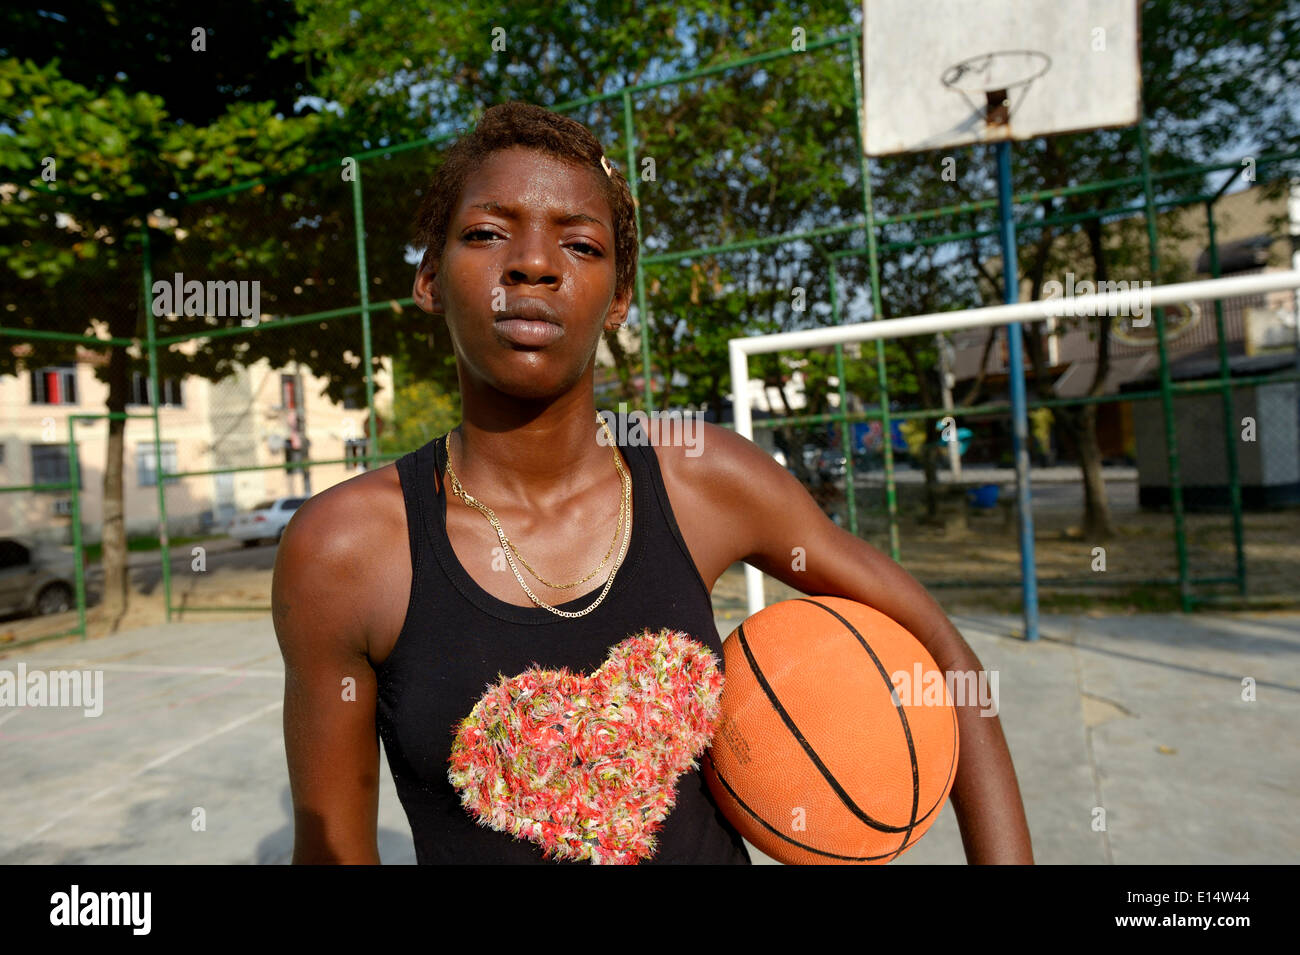 Youth, 15, with a basketball, Rio de Janeiro, Rio de Janeiro State, Brazil Stock Photo